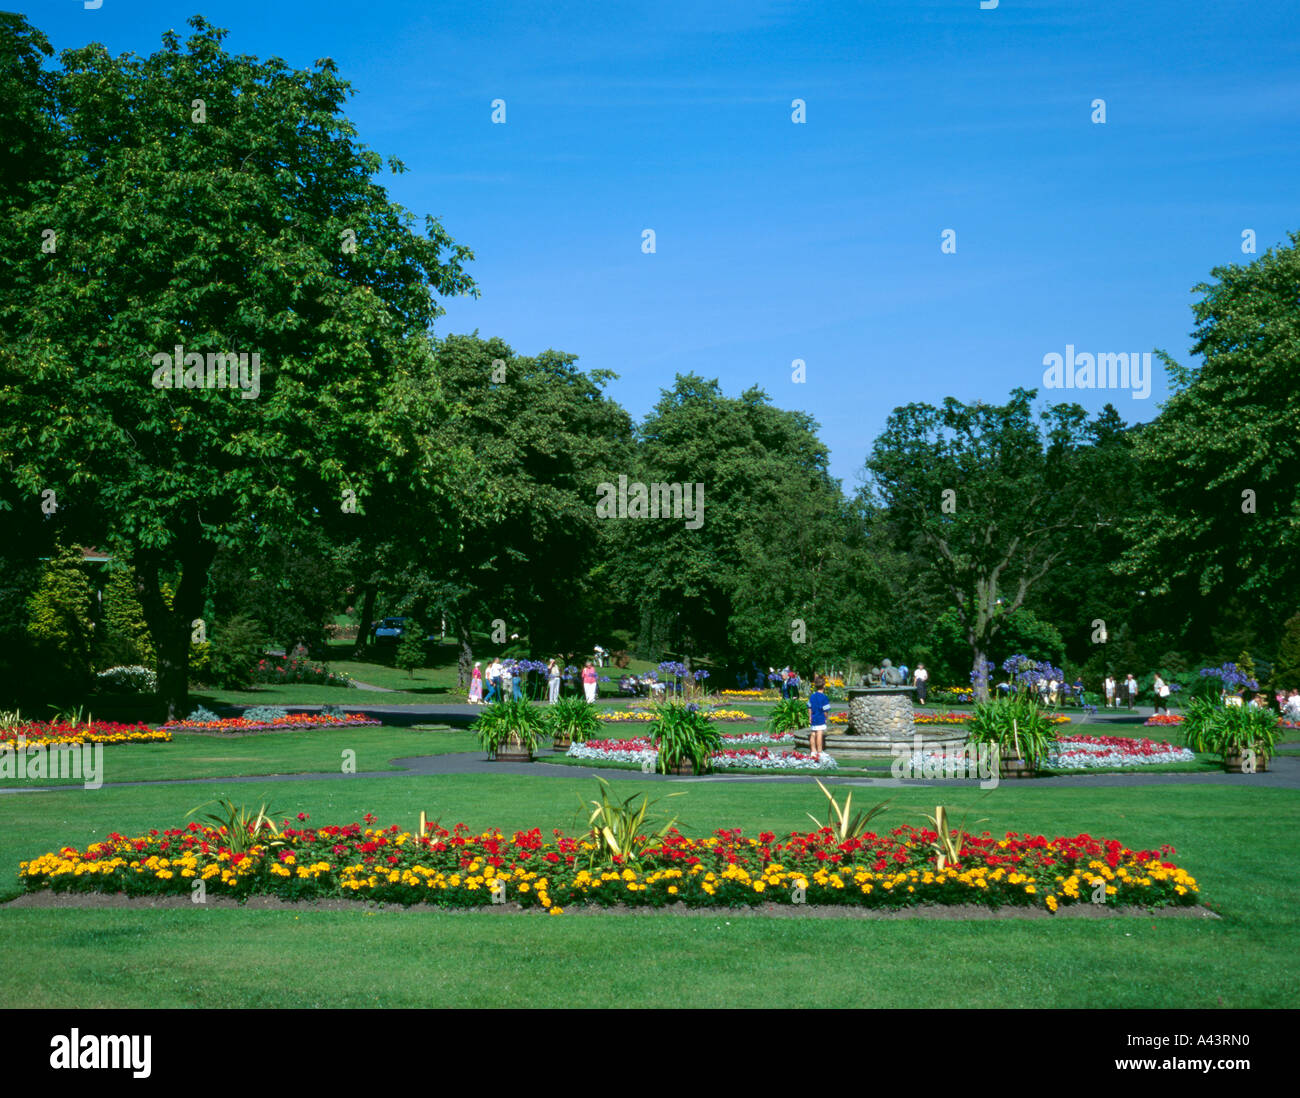 Blütenpracht, Valley Gardens, Harrogate, North Yorkshire, England, UK. Stockfoto